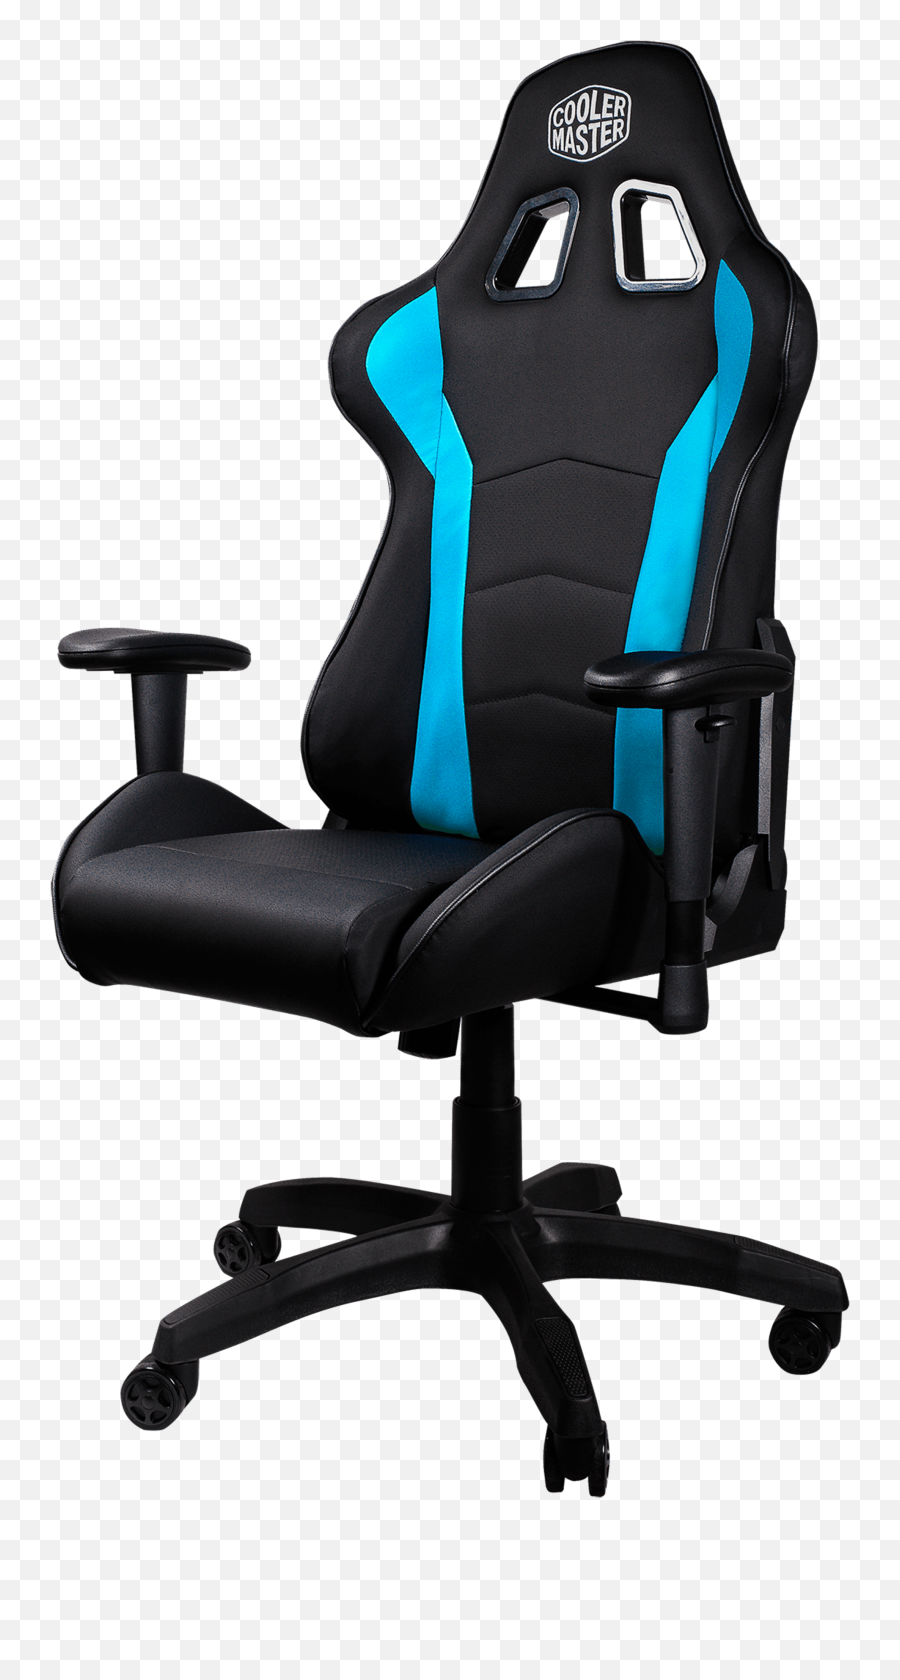 Caliber R1 Cooler Master - Cooler Master Caliber R1 Png,Gaming Chair Png